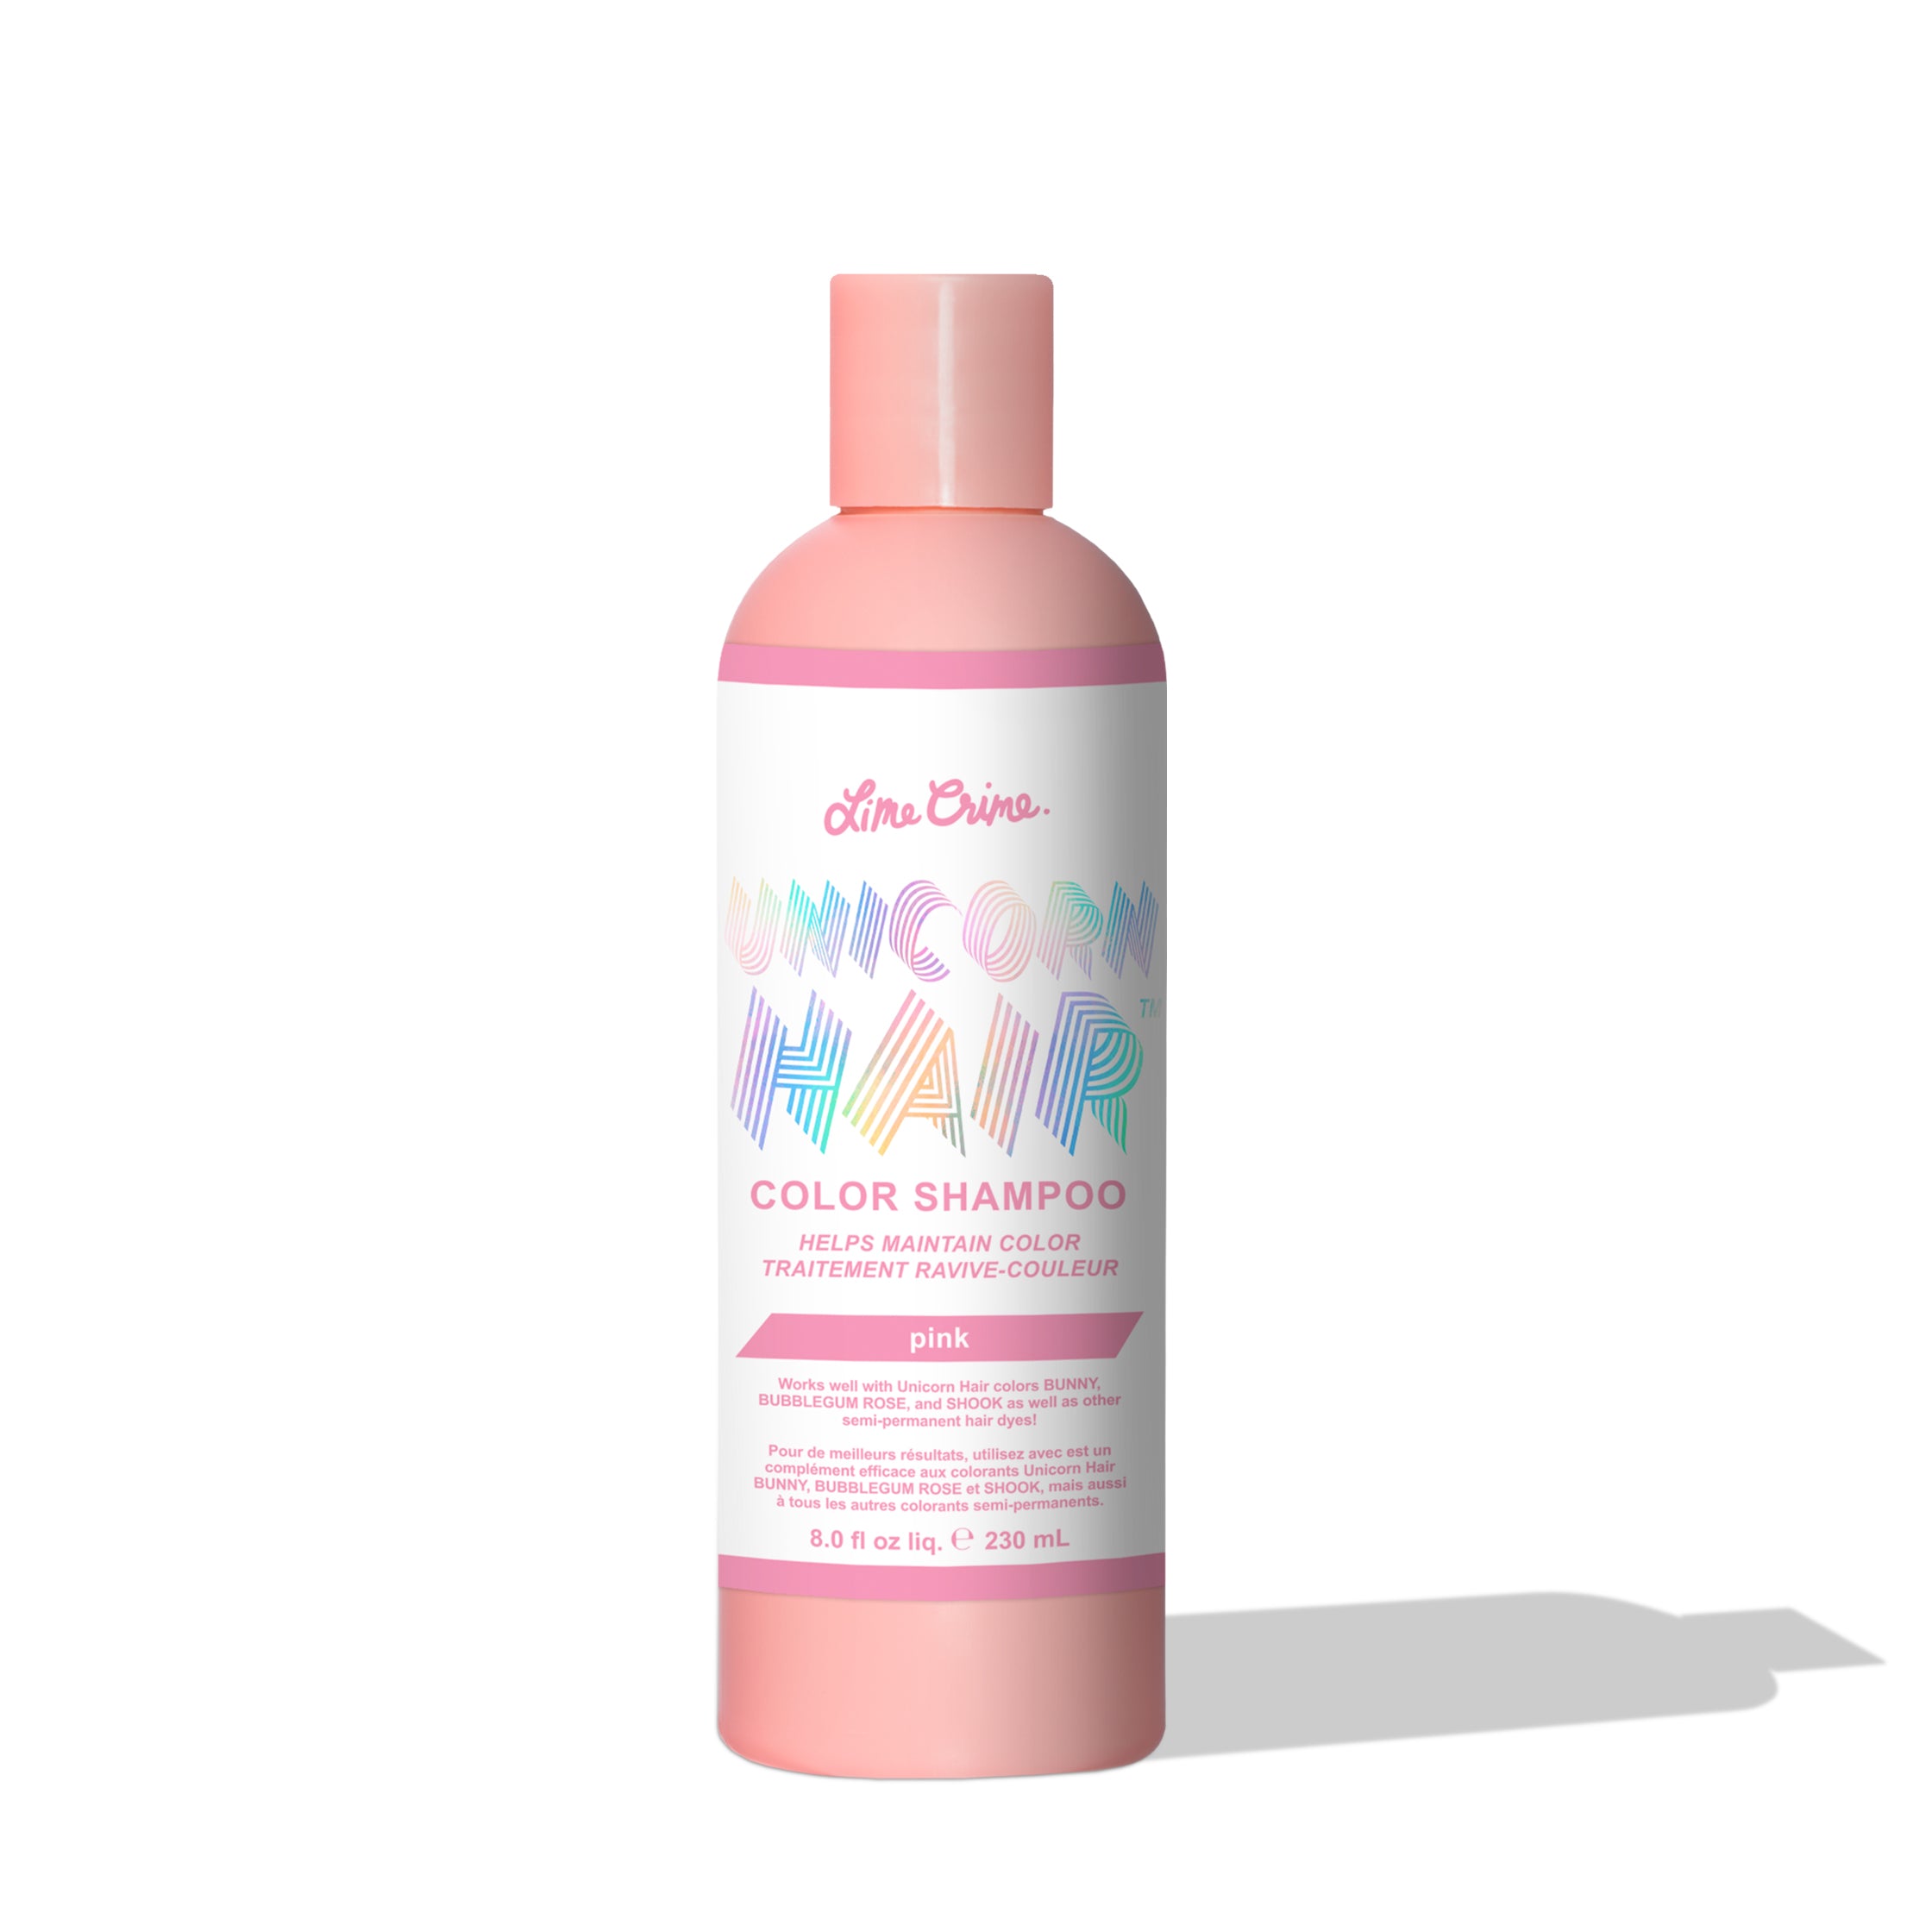 Pink Shampoo variant:Pink